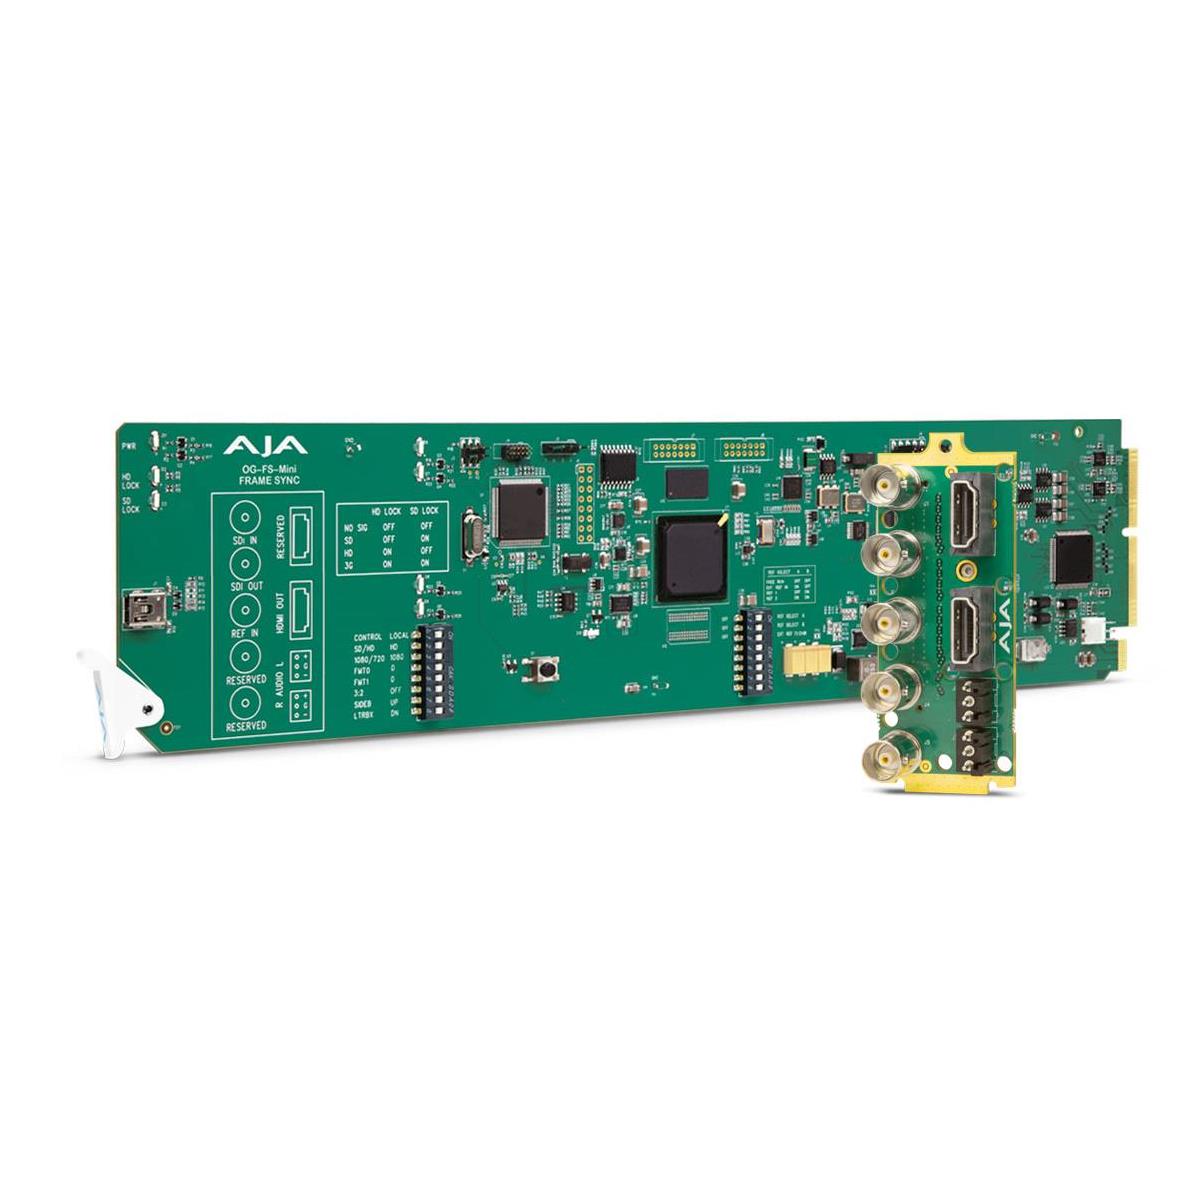 Image of AJA OG-FS-Mini 3G-SDI Utility Frame Synchronizer with DashBoard Support